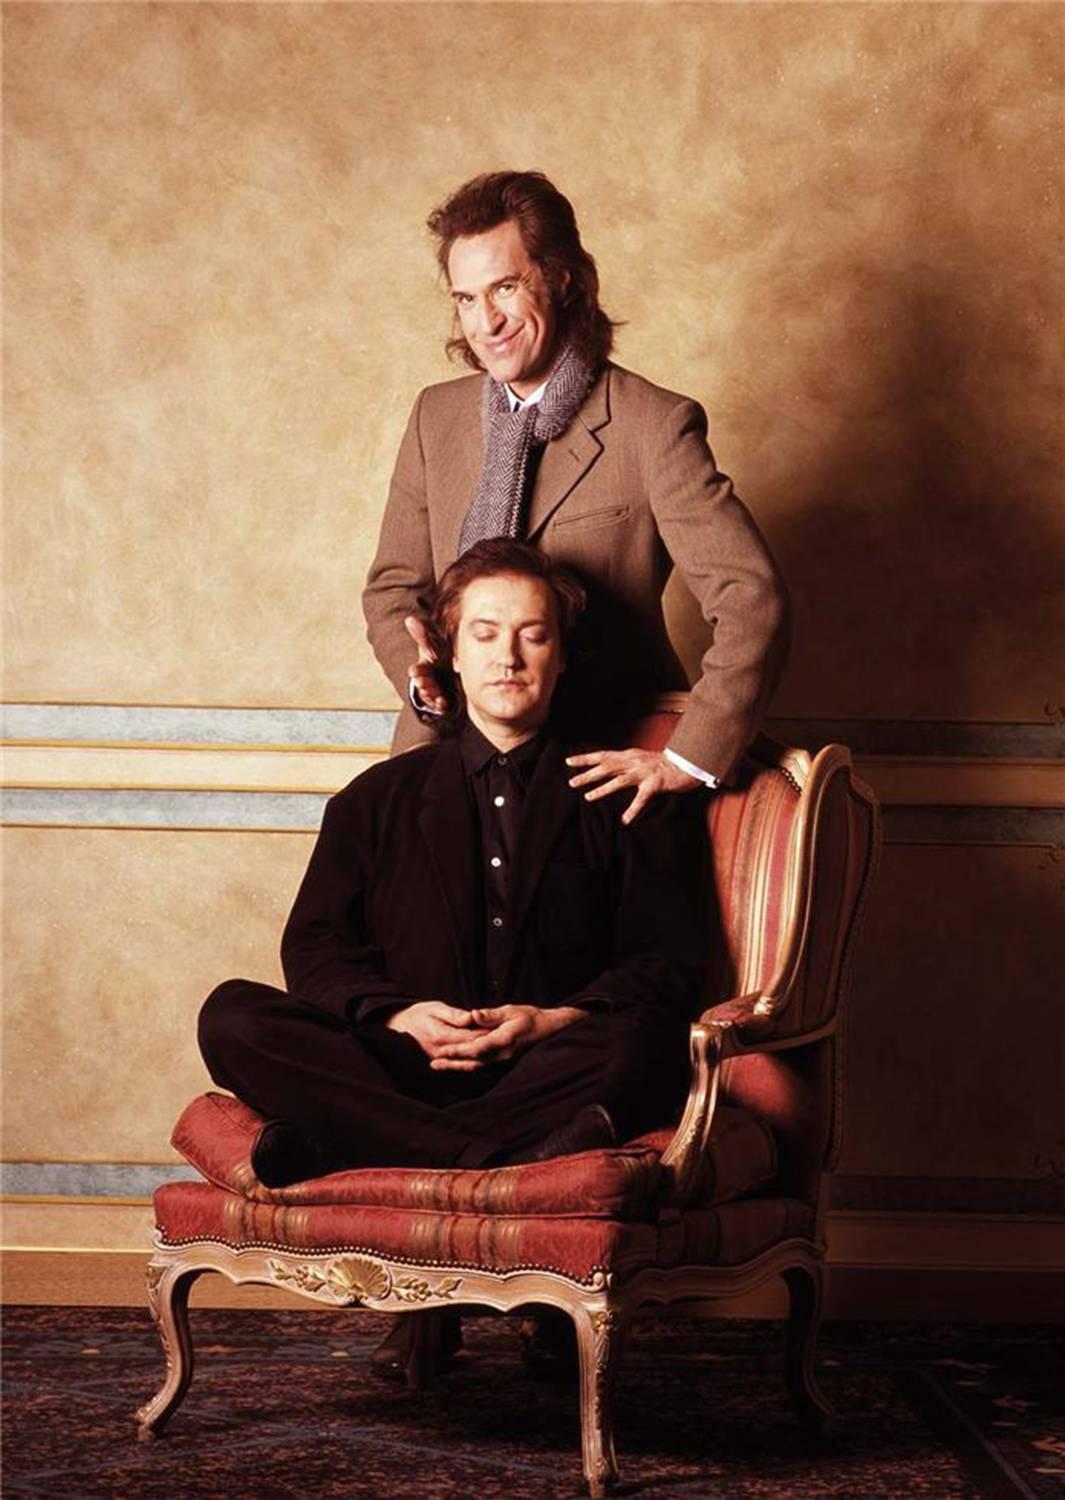 Guido Harari Portrait Photograph - Dave and Ray Davies, The Kinks, Milano, 1993